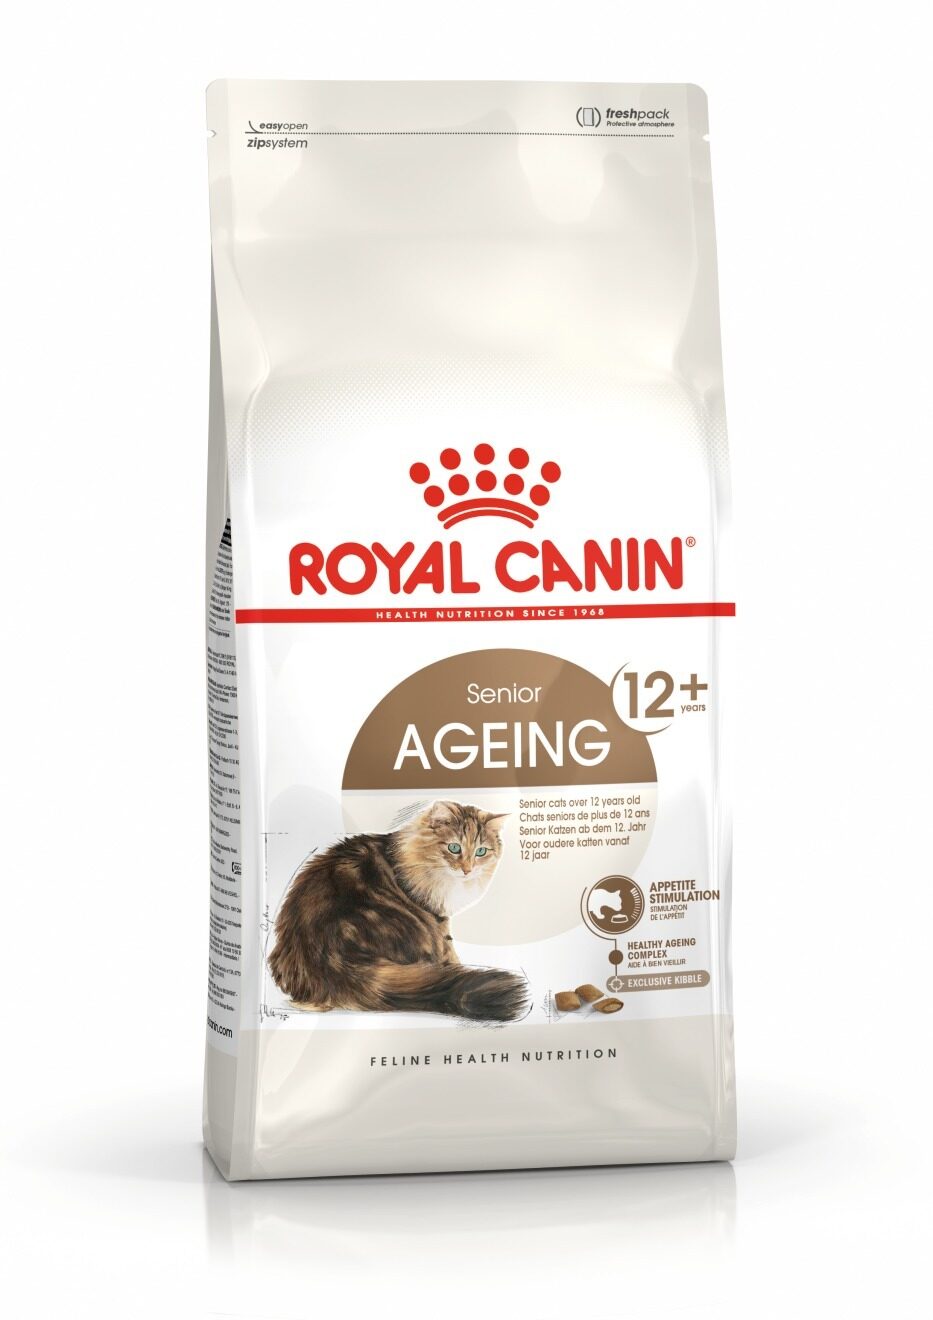 Royal Canin Ageing 12+, развес 1 кг